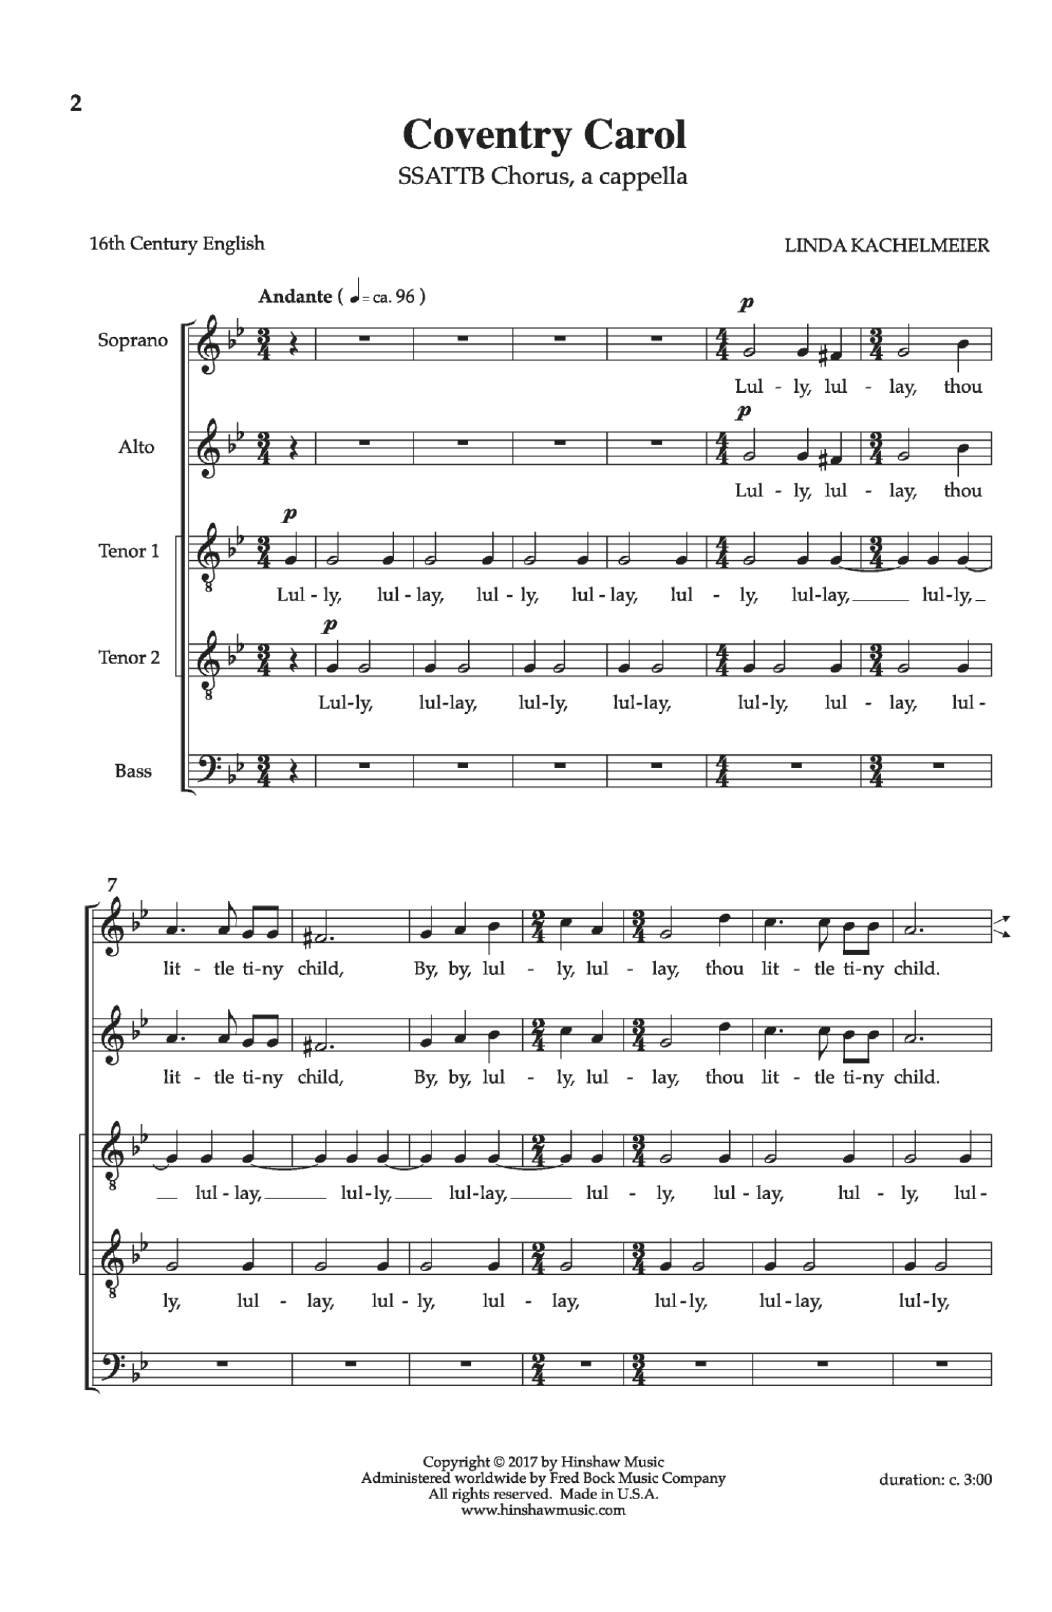 Linda Kachelmeier Coventry Carol Sheet Music Notes & Chords for Choral - Download or Print PDF